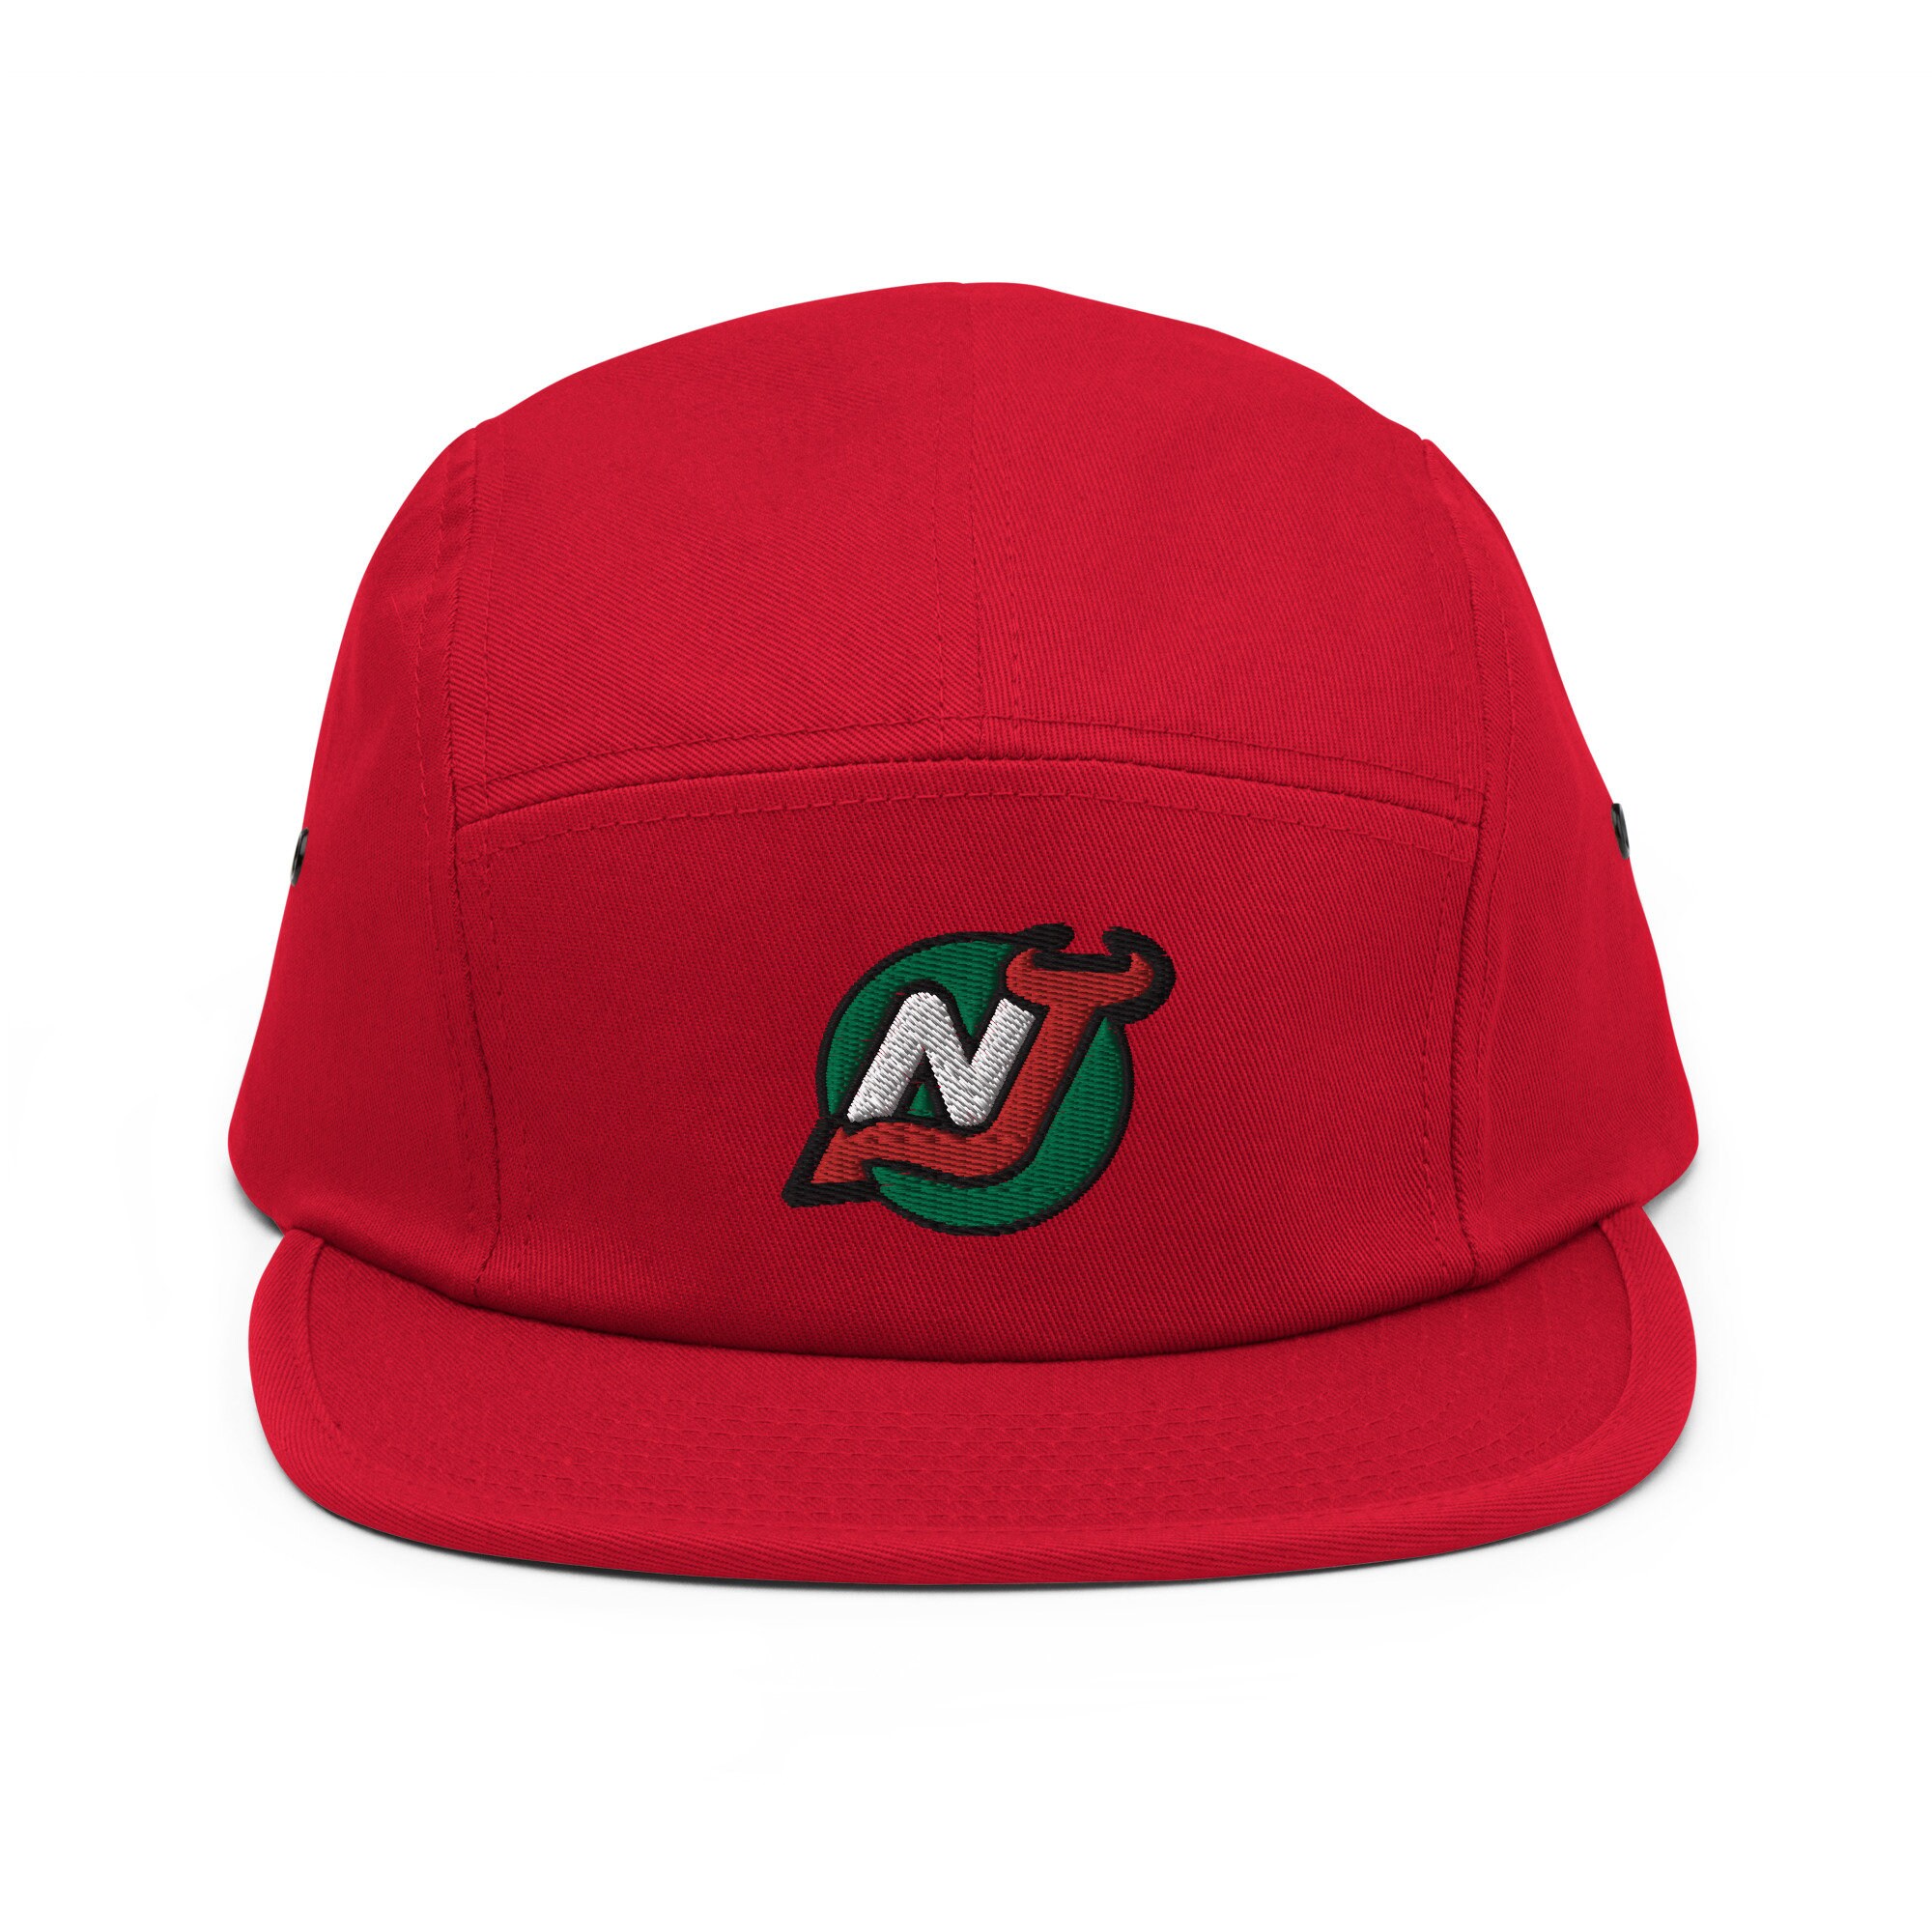 Devils Hat - Black Jersey Alternate Colors Hockey Hat… (Chirper